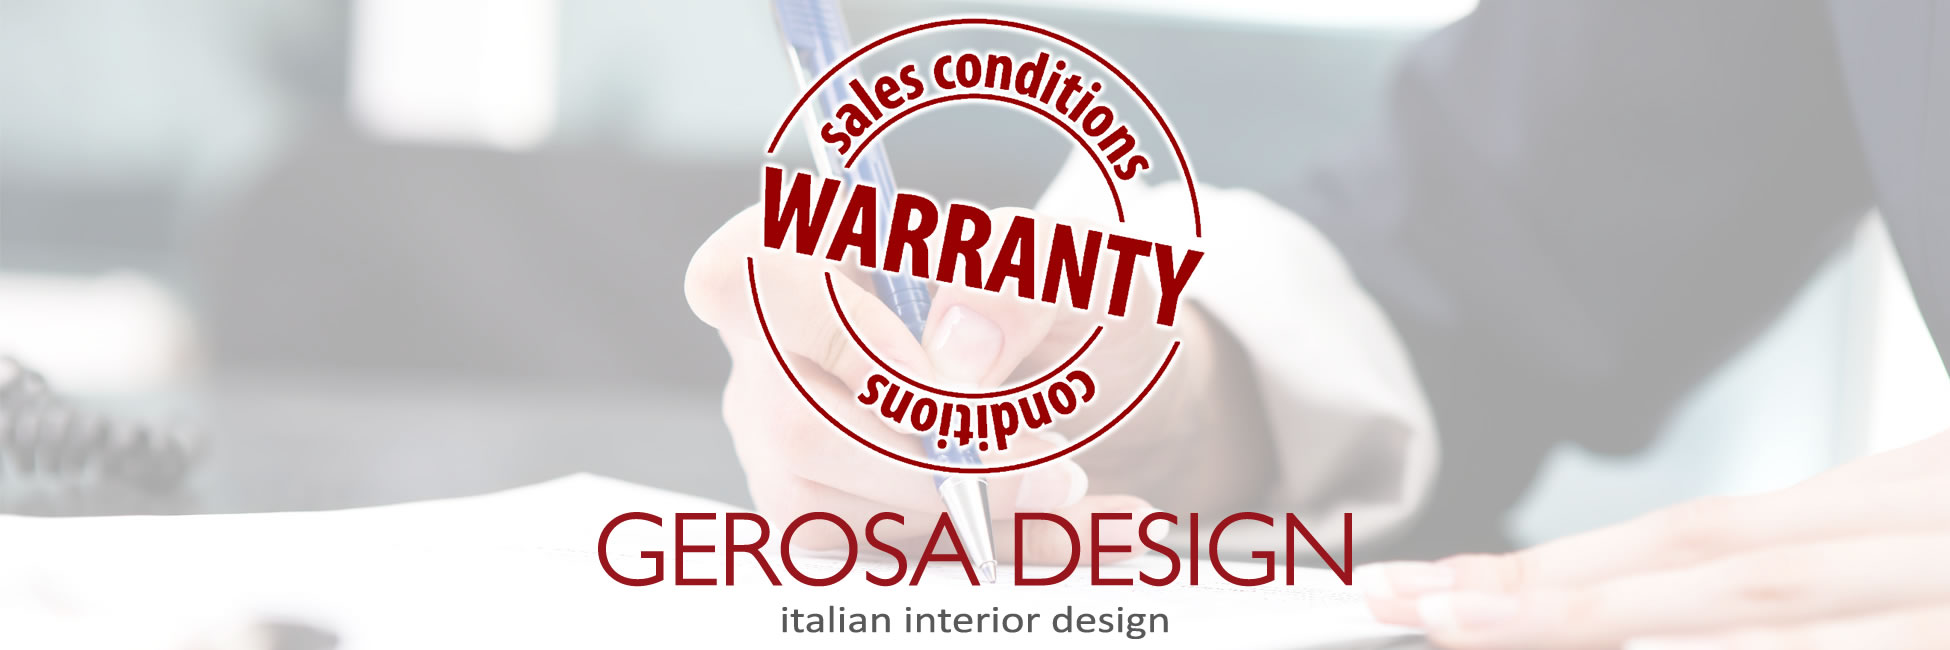 Verkaufsbedingungen - Gerosa Design